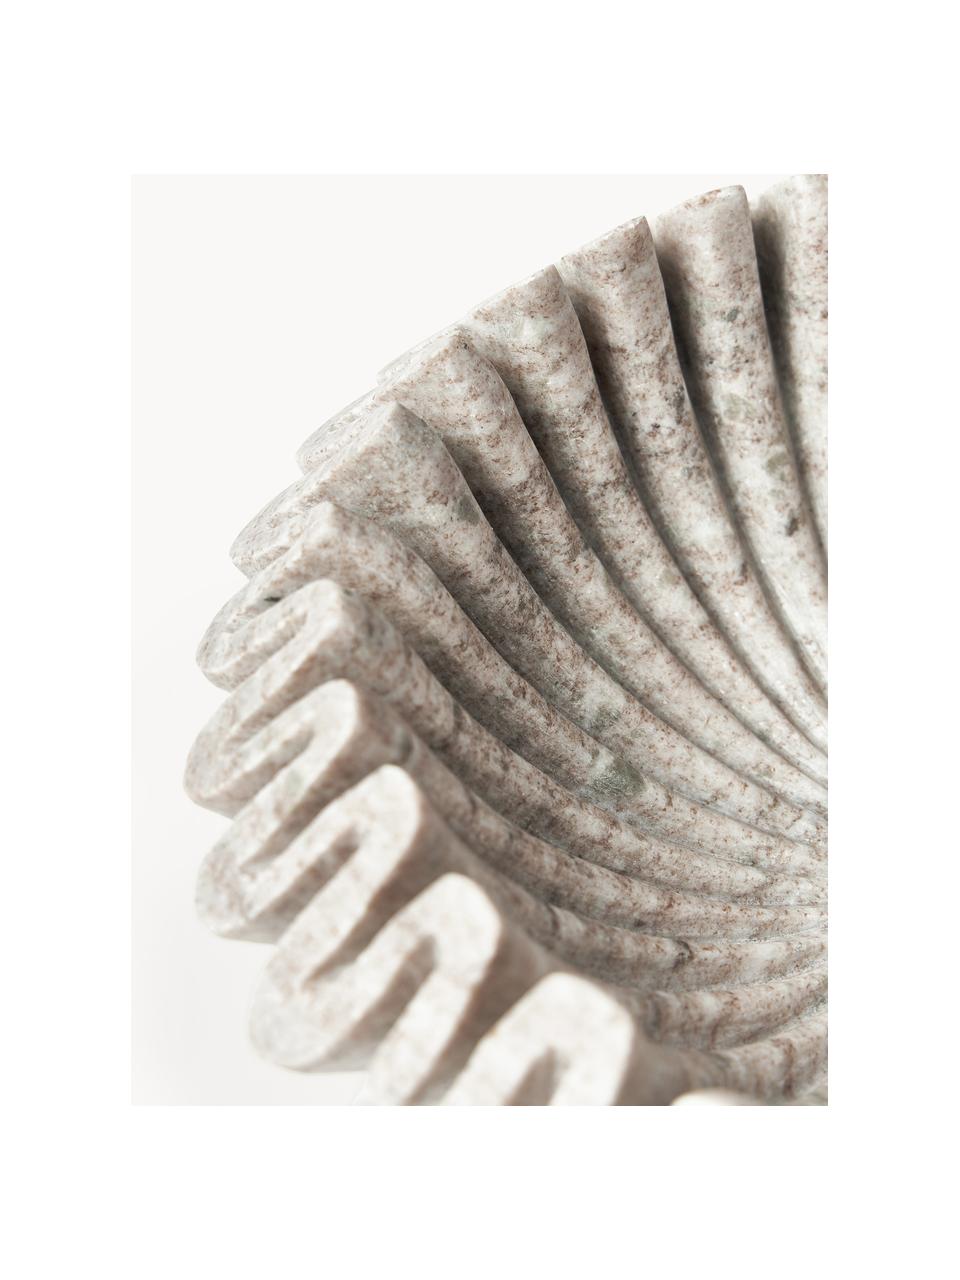 Handgefertigte Deko-Schale Santorini aus Marmor, Ø 31 cm, Marmor, Braun, marmoriert, Ø 31 x H 11 cm